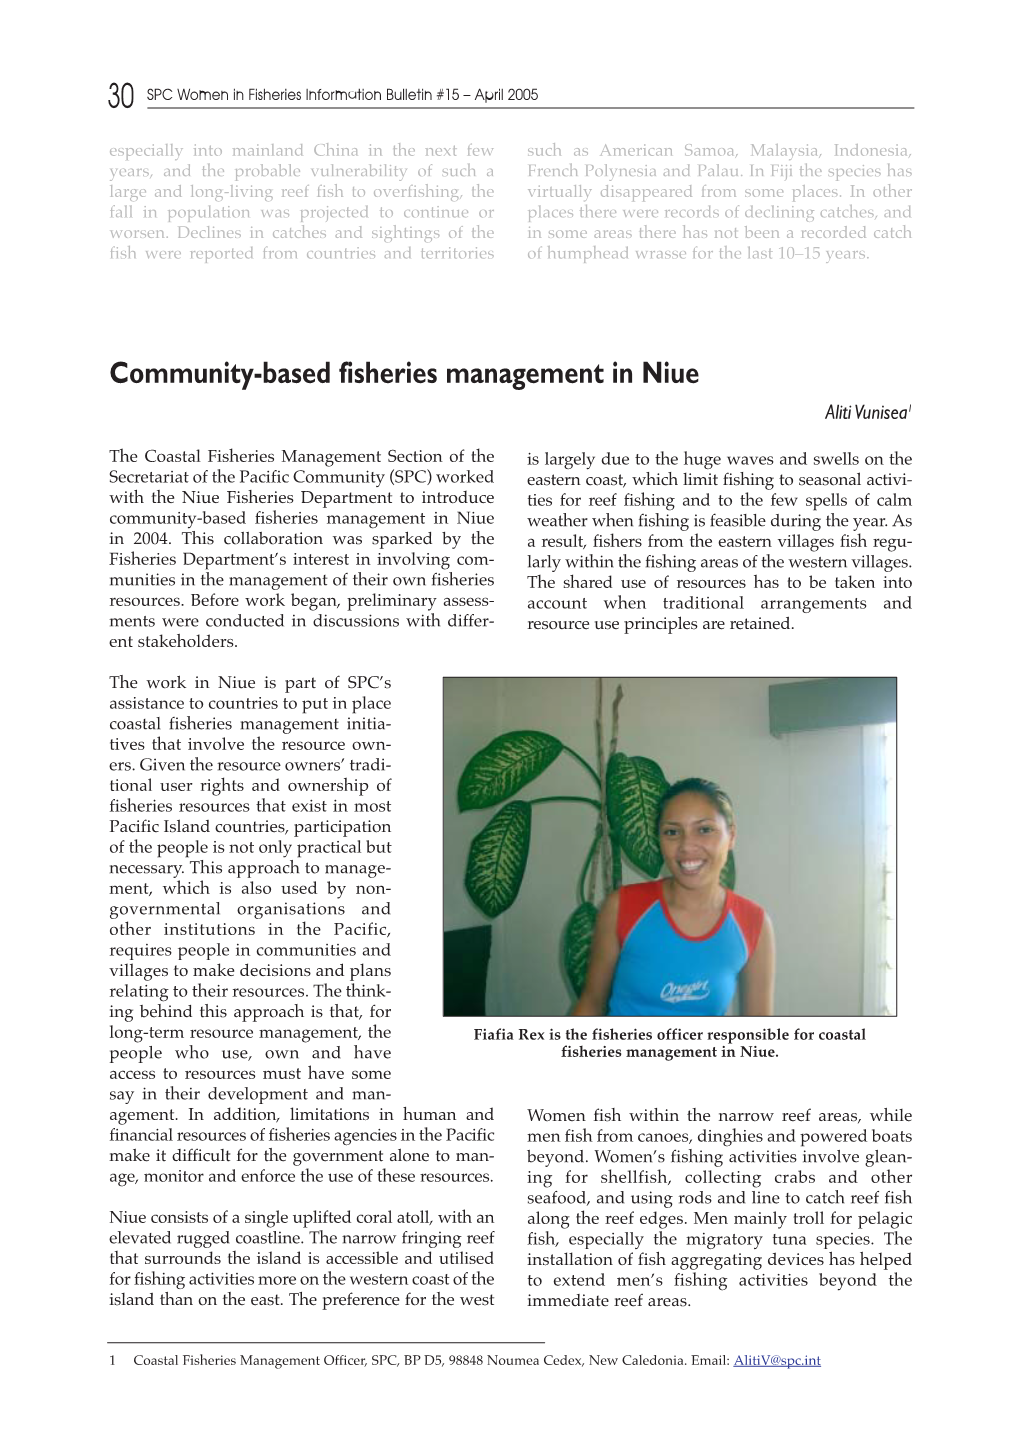 Community-Based Fisheries Management in Niue Aliti Vunisea1